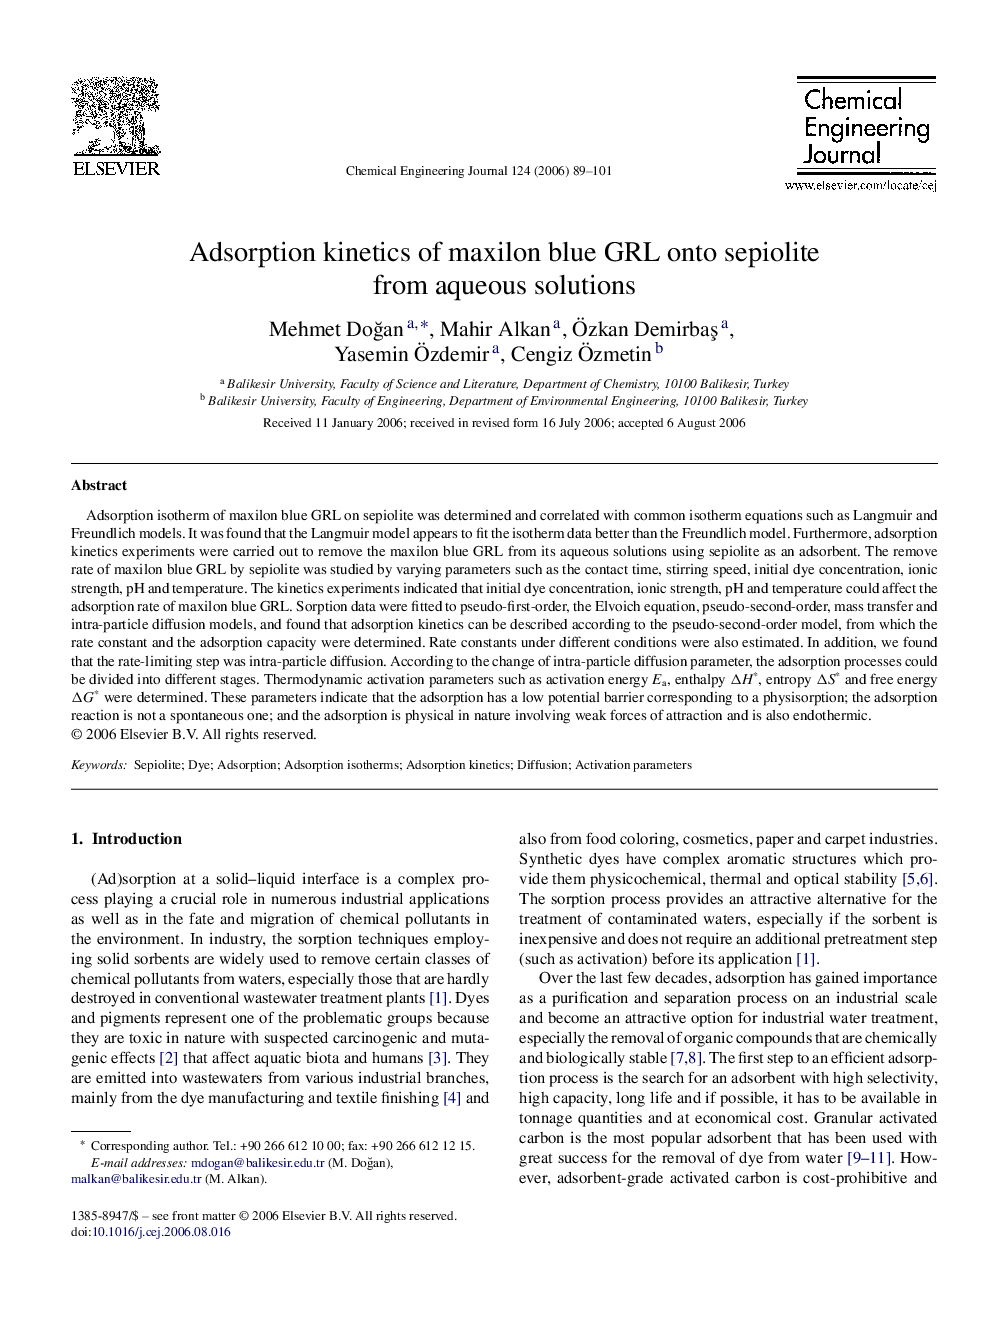 Adsorption kinetics of maxilon blue GRL onto sepiolite from aqueous solutions